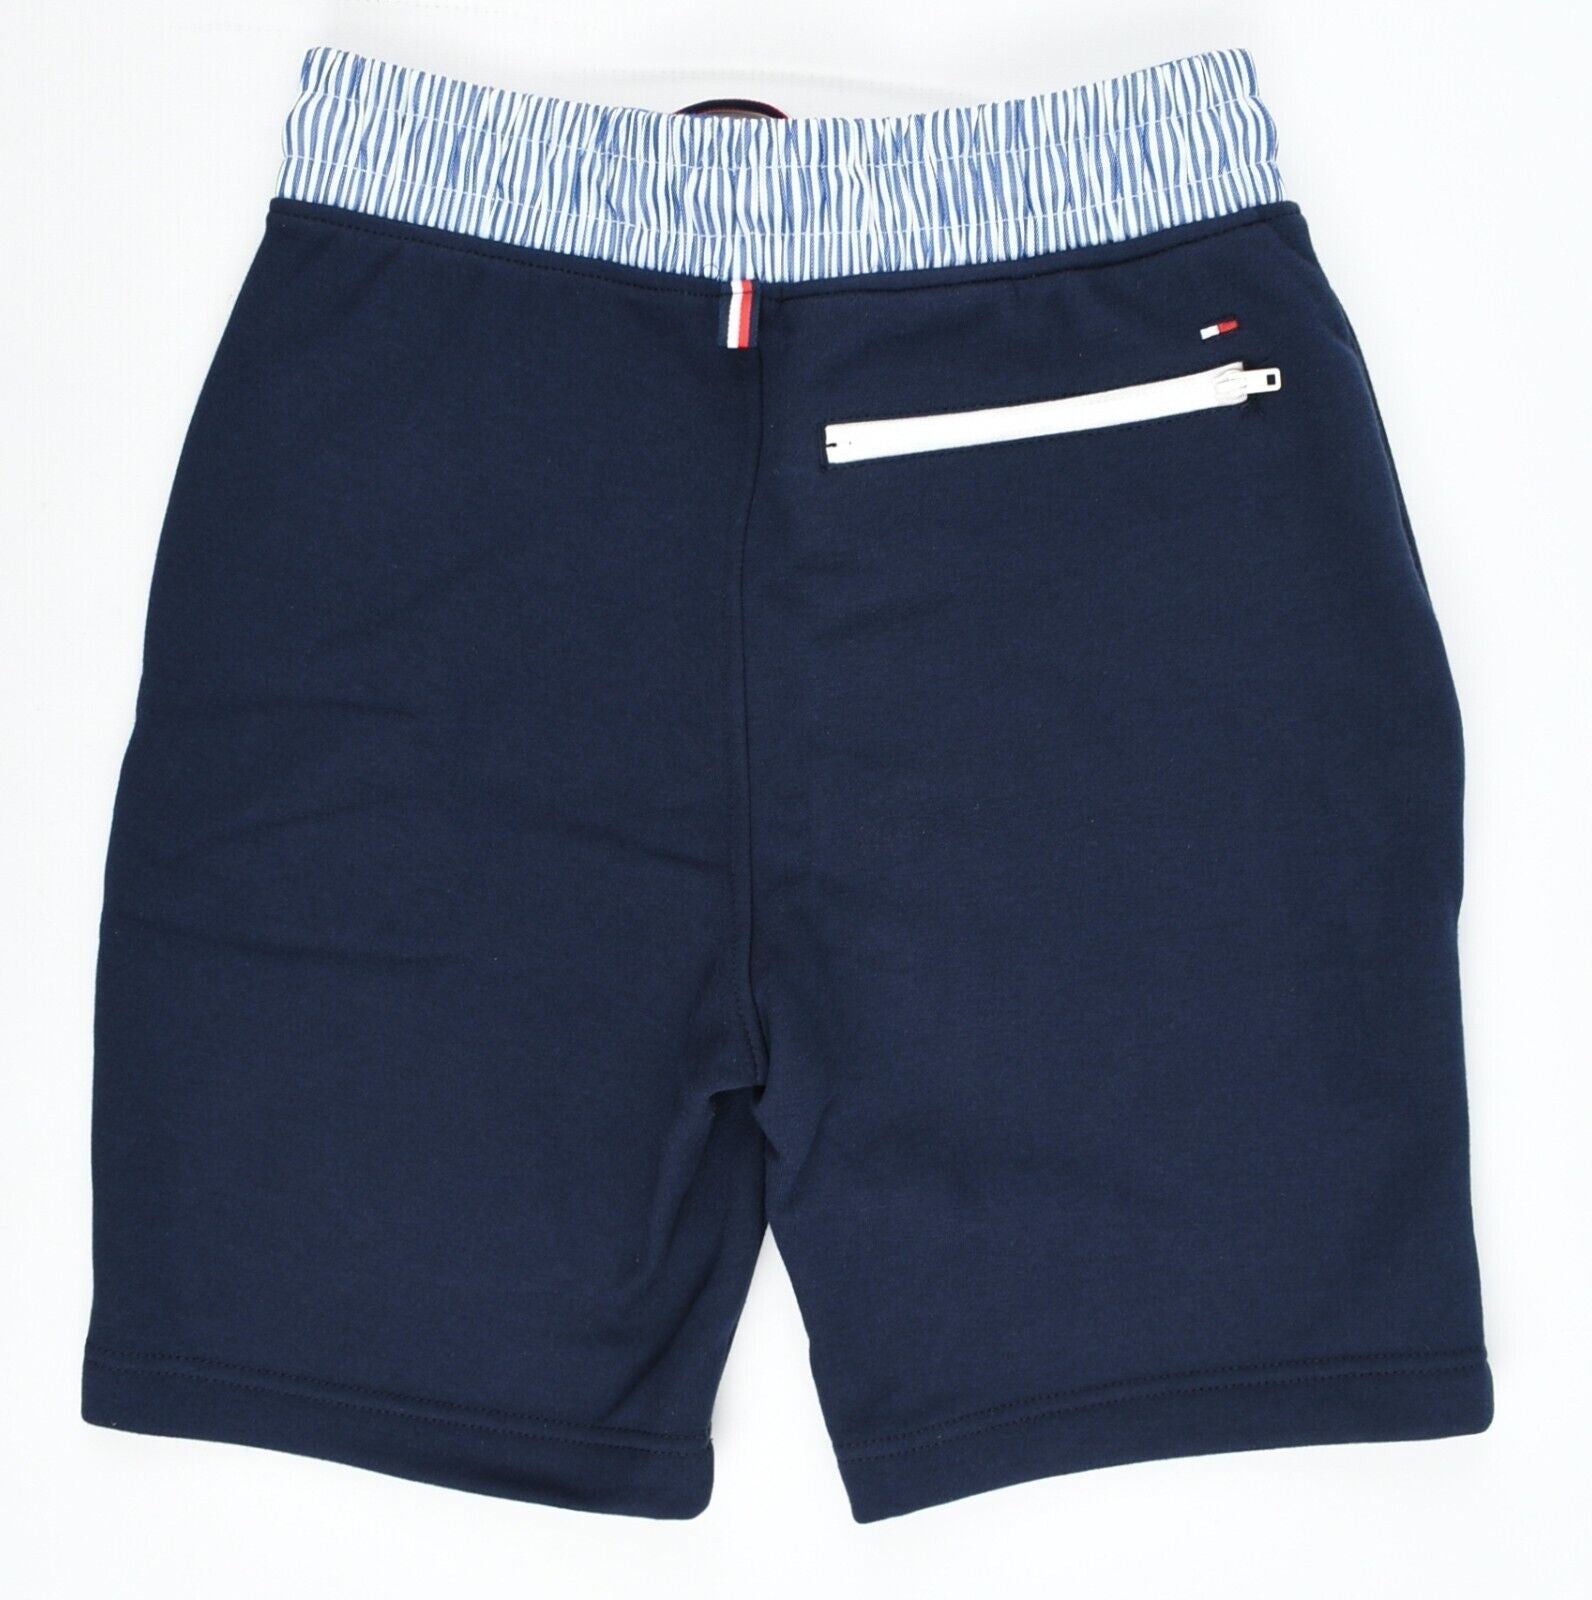 TOMMY HILFIGER Men's Sweat Shorts, Navy Blue, size XS